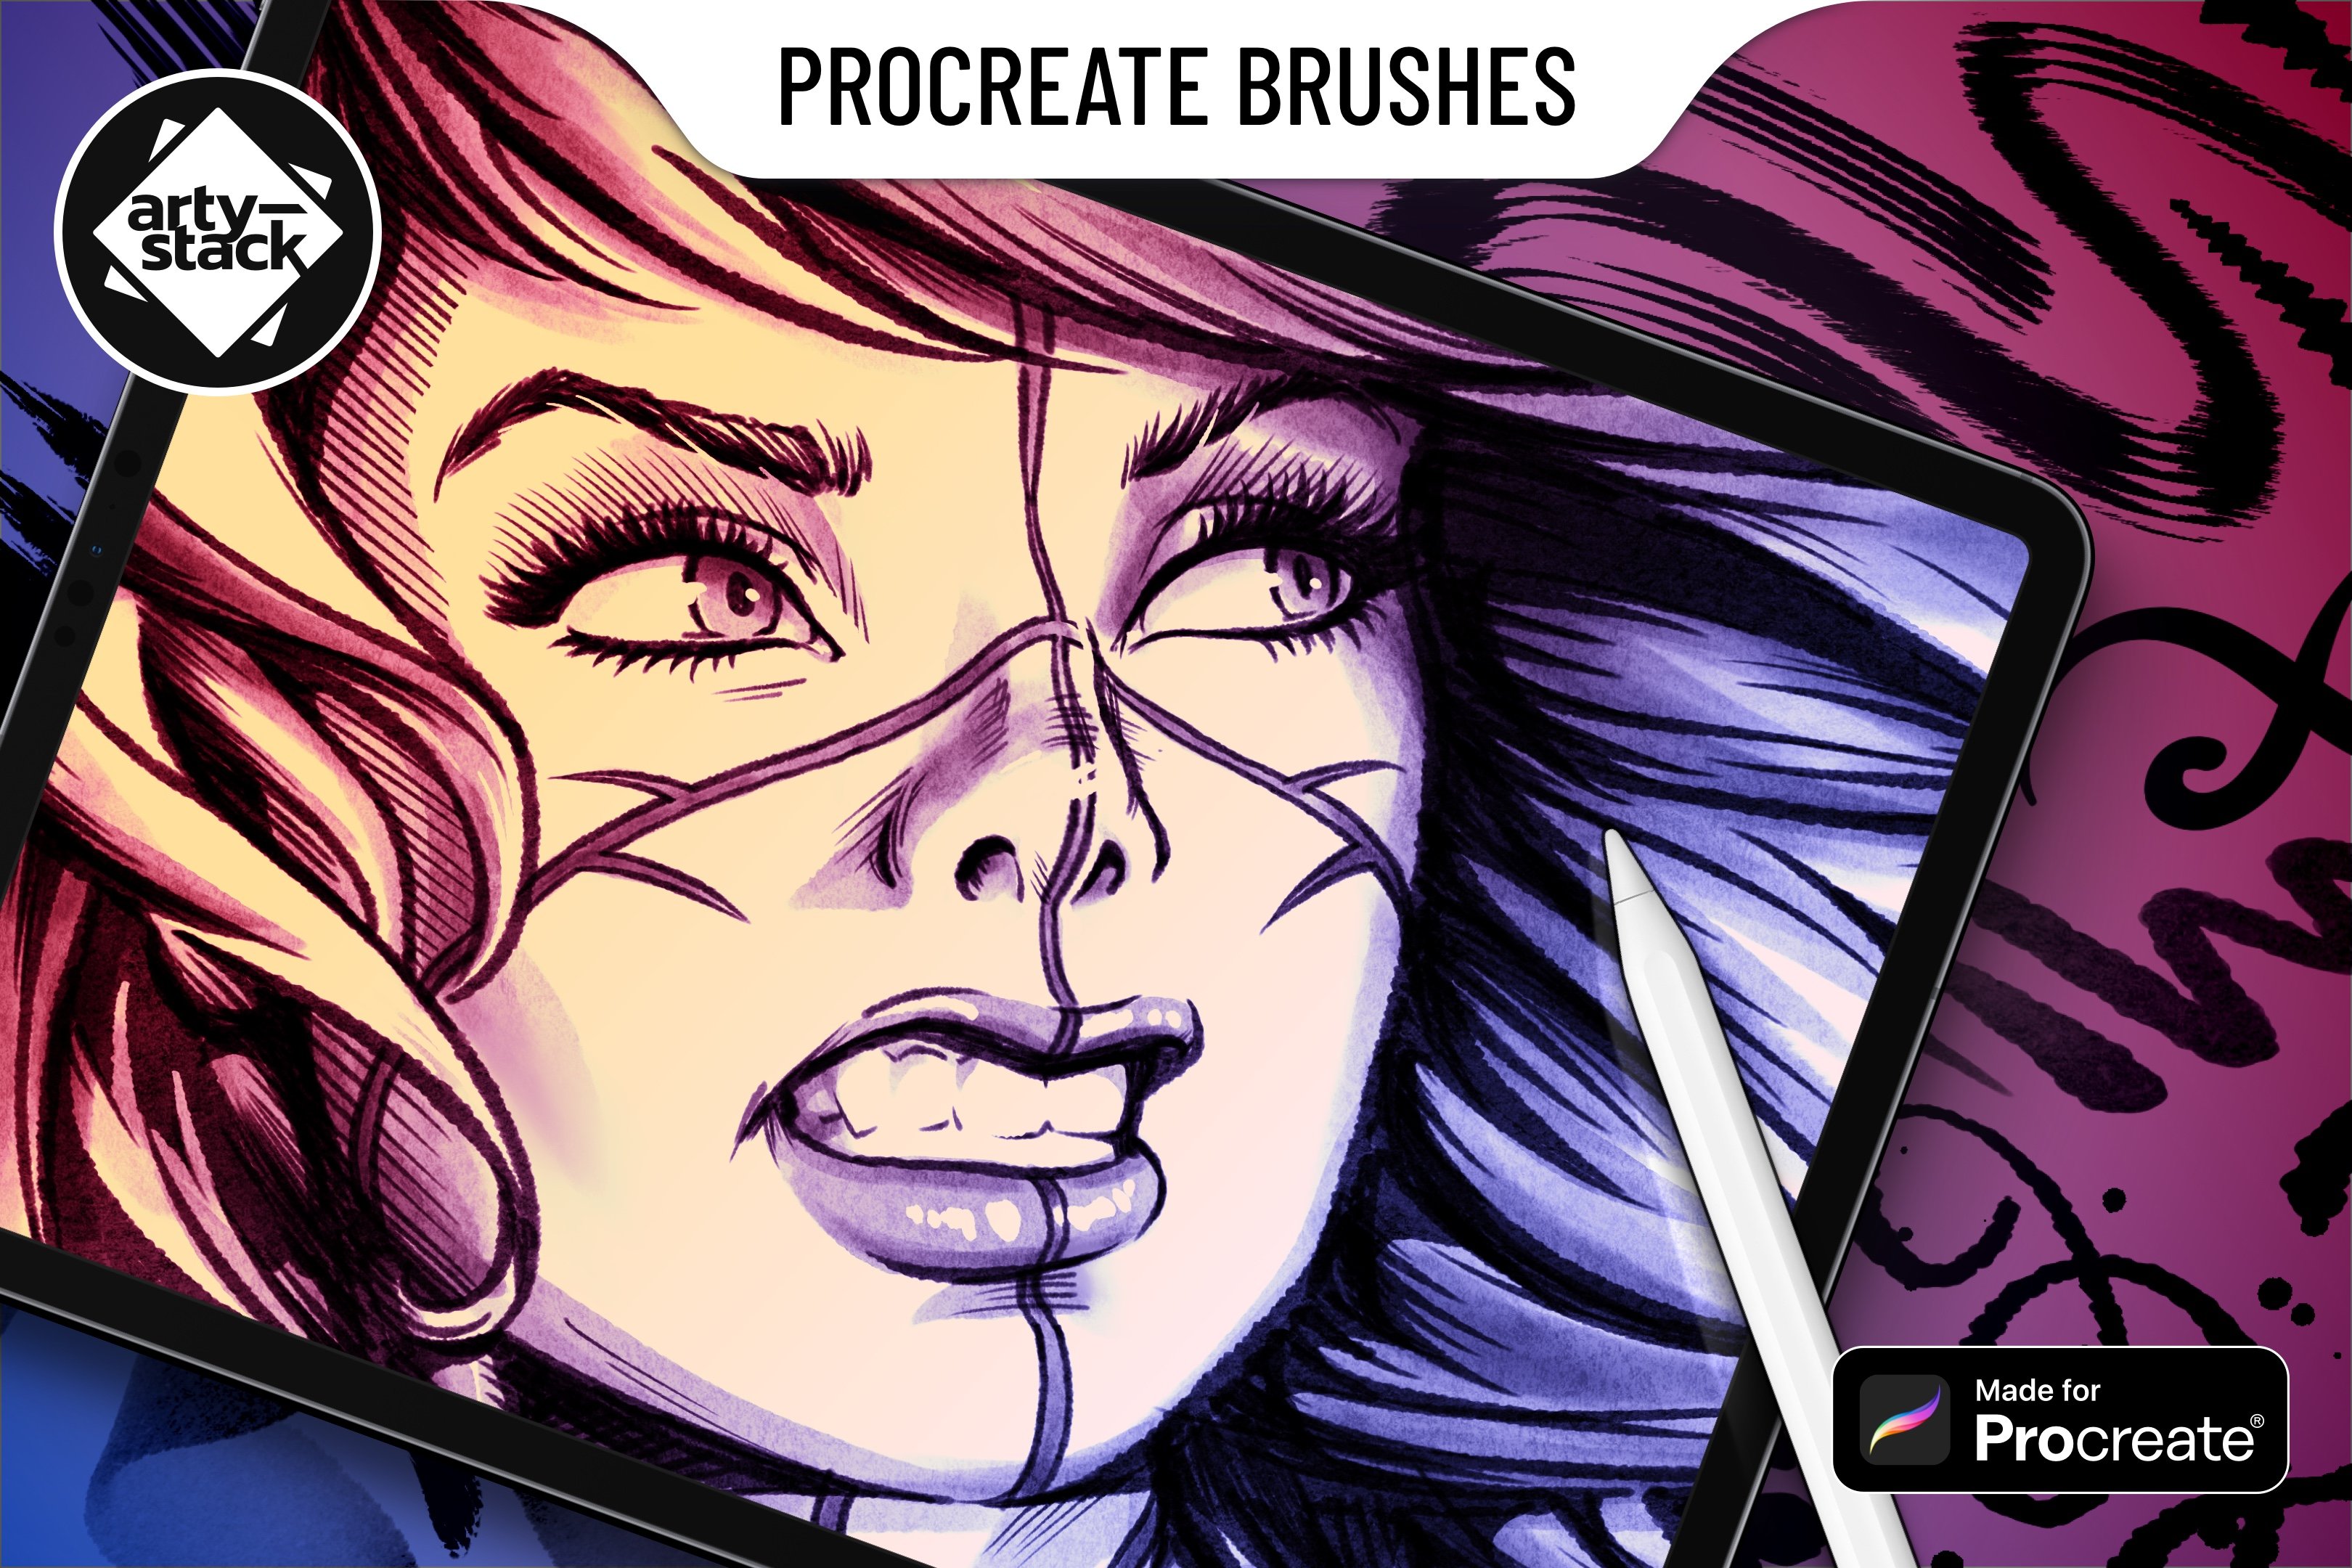 Procreate Comic Brushes